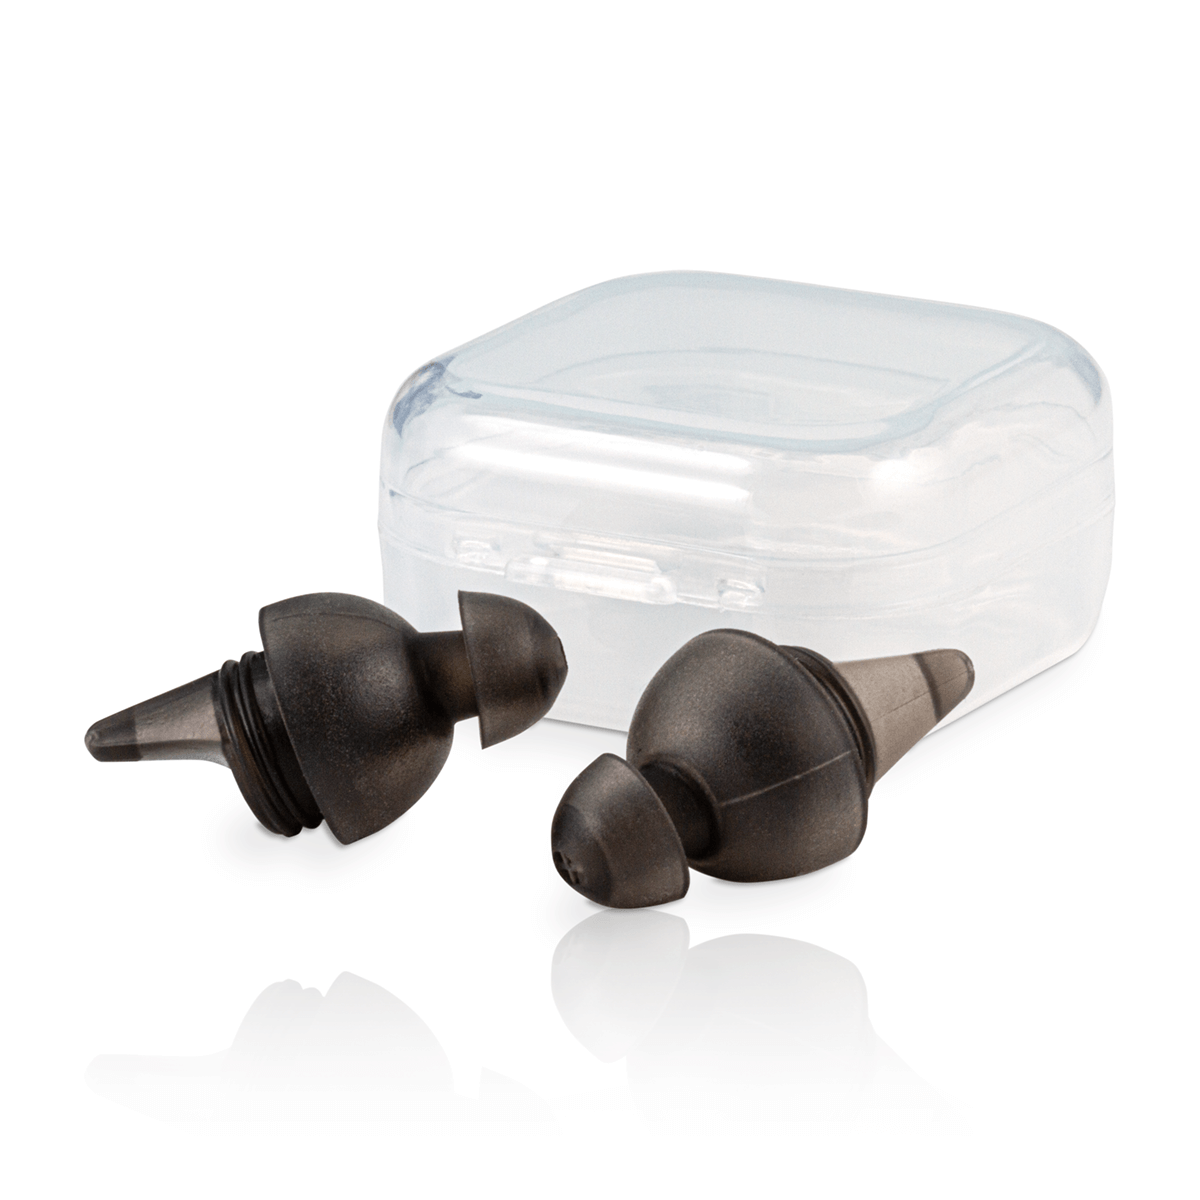 ZQuiet ergo-soft replacement earplugs product image